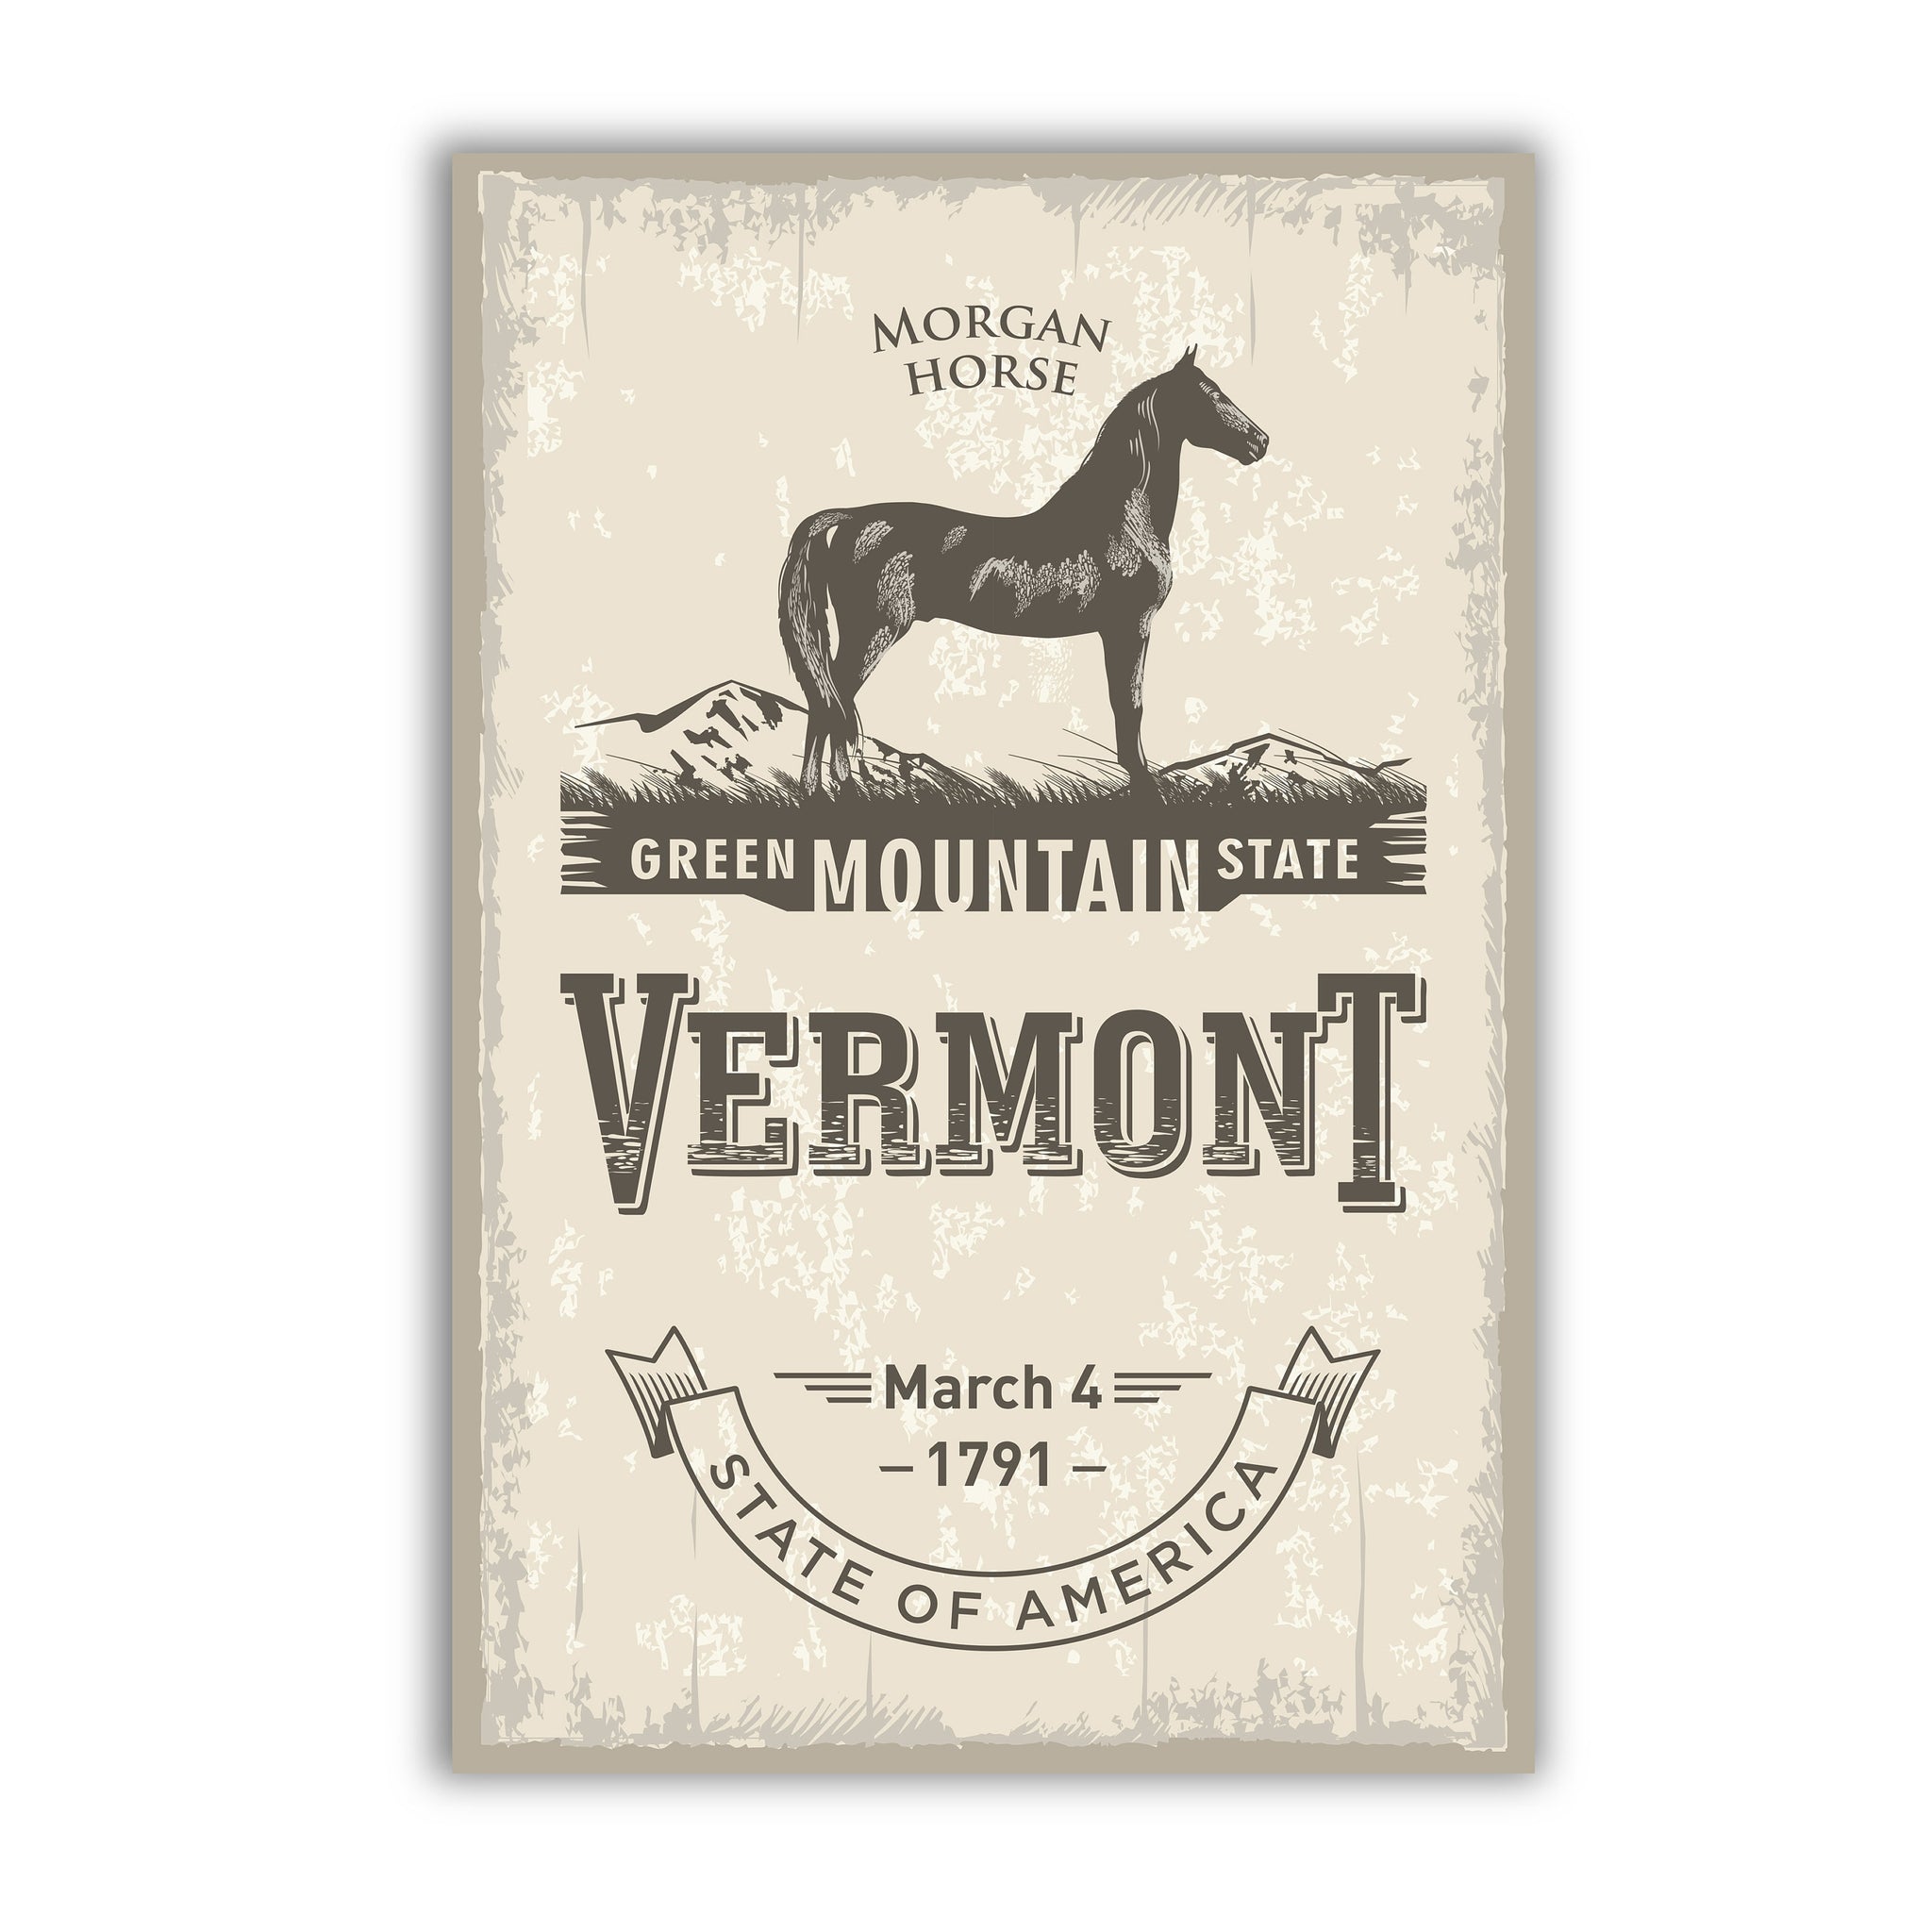 VERMONT state Morgan Horse symbol Poster, Green mountain state poster print, Vermont state emblem poster, Retro travel states poster print